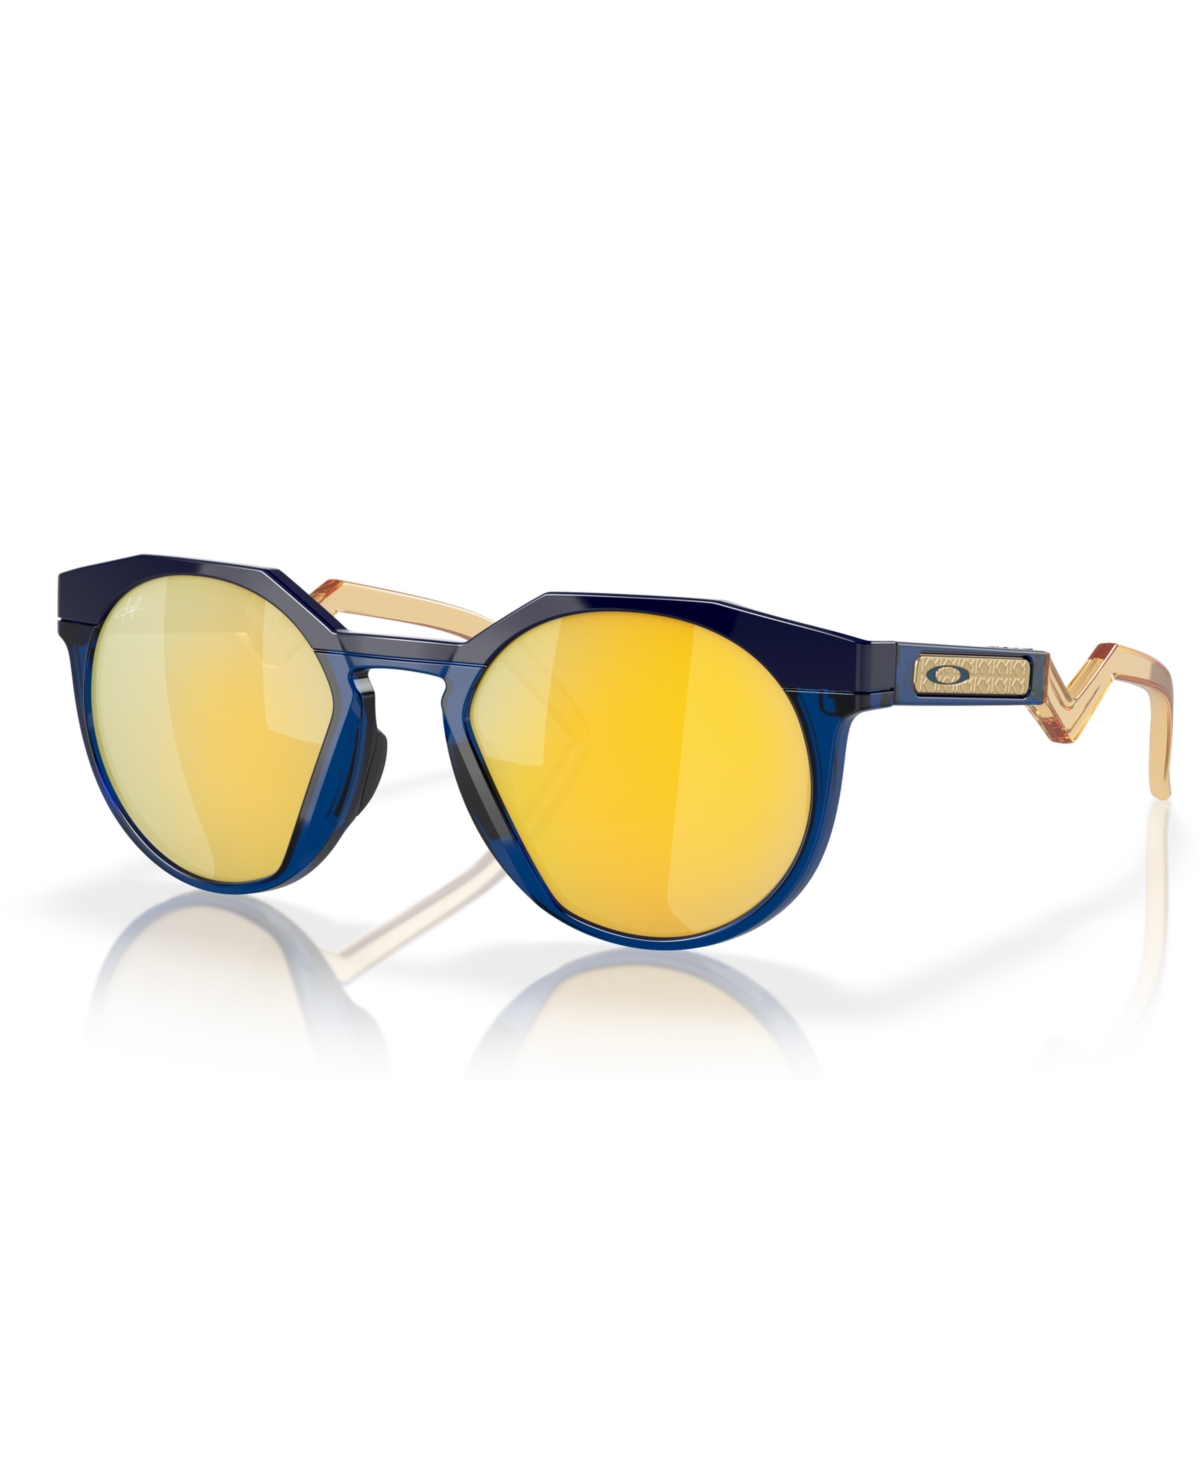 Men's Polarized Sunglasses, Kylian Mbappa Signature Series Hstn Oo9242 - Navy, Transparent Blue